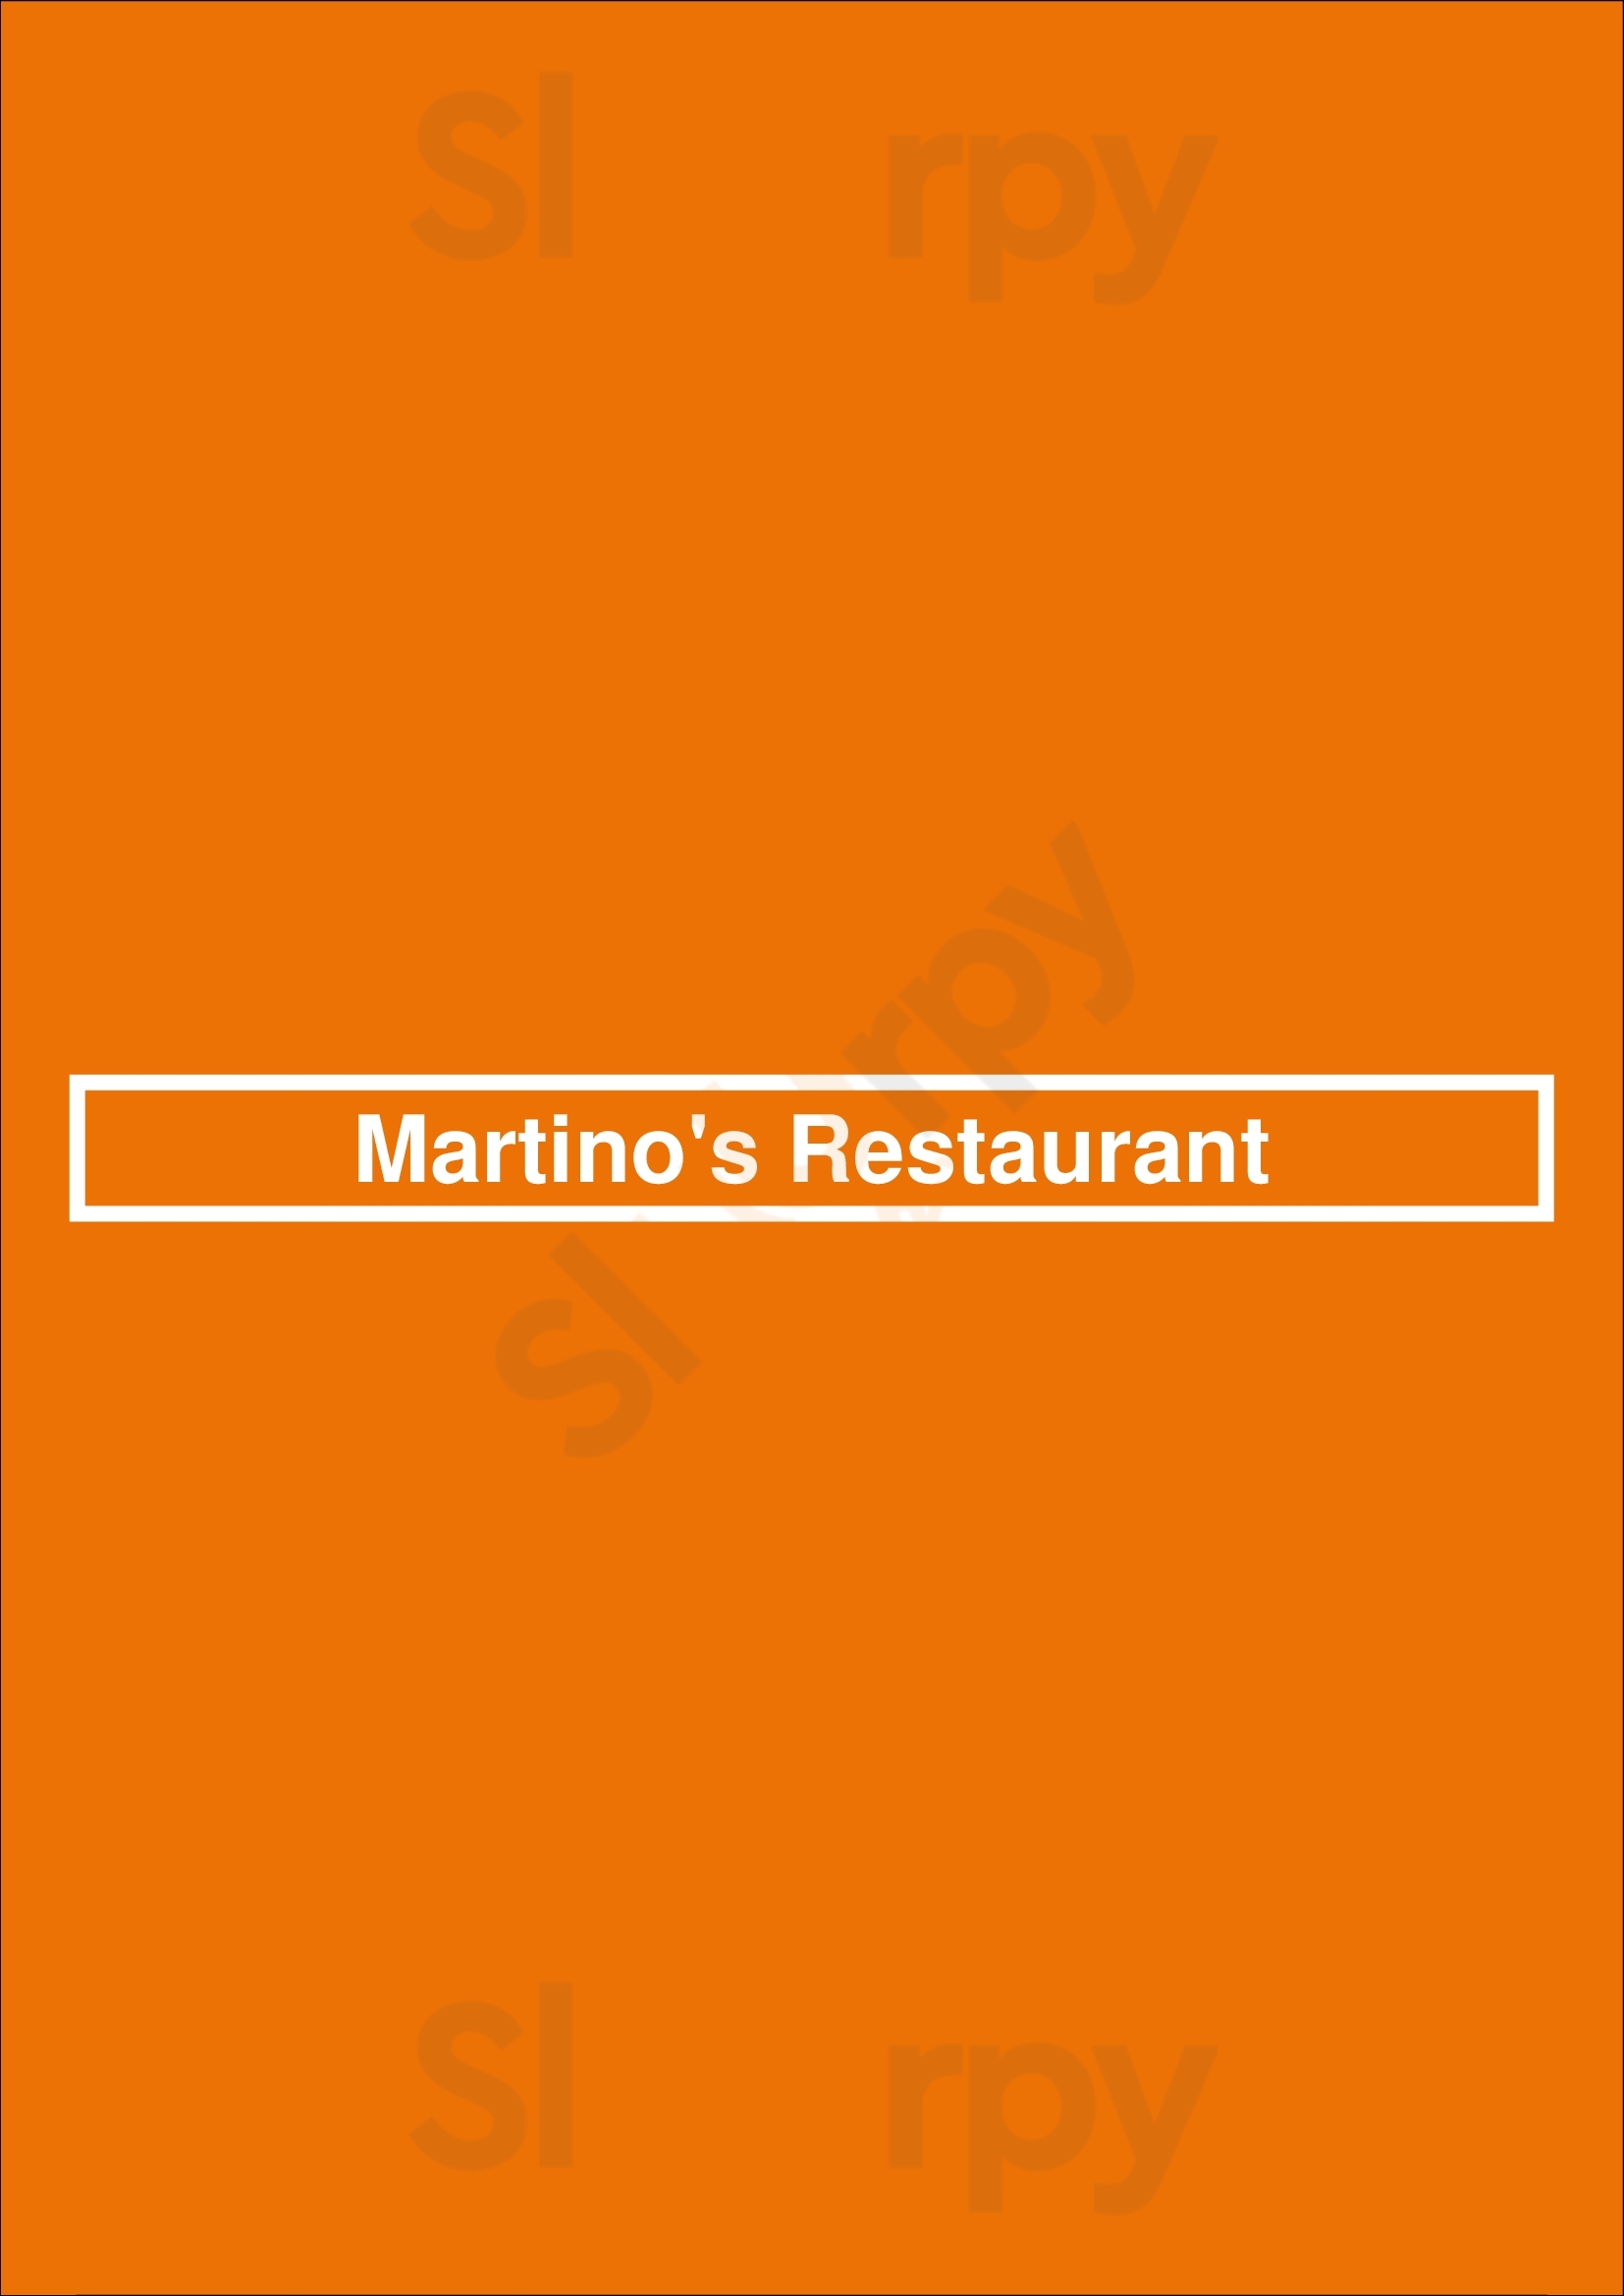 Martino's Restaurant Cincinnati Menu - 1